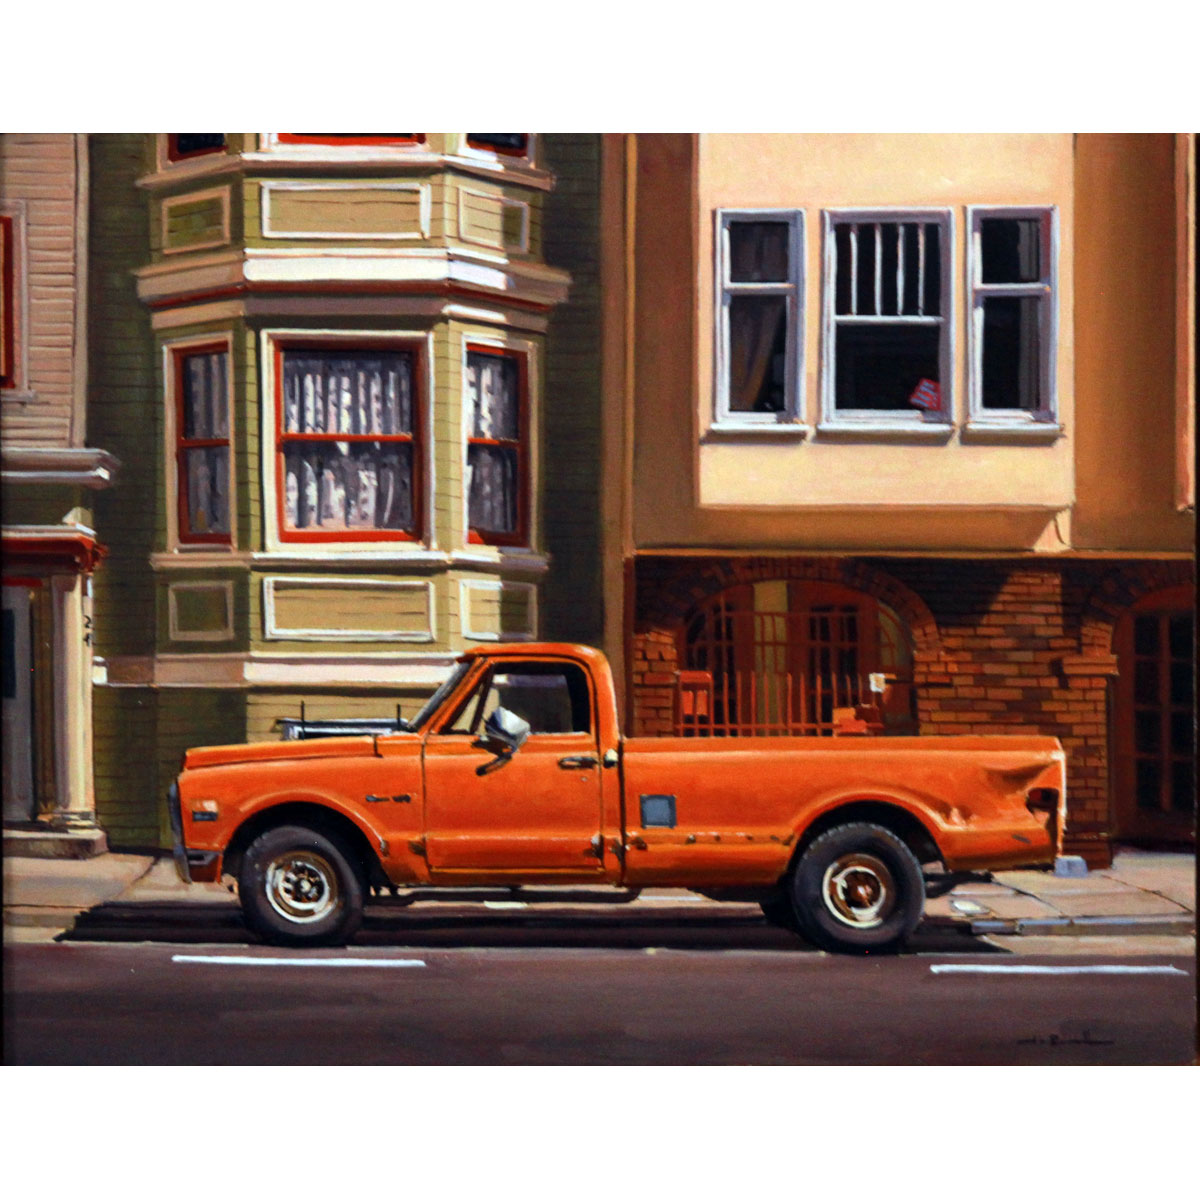 San Francisco by James Randle